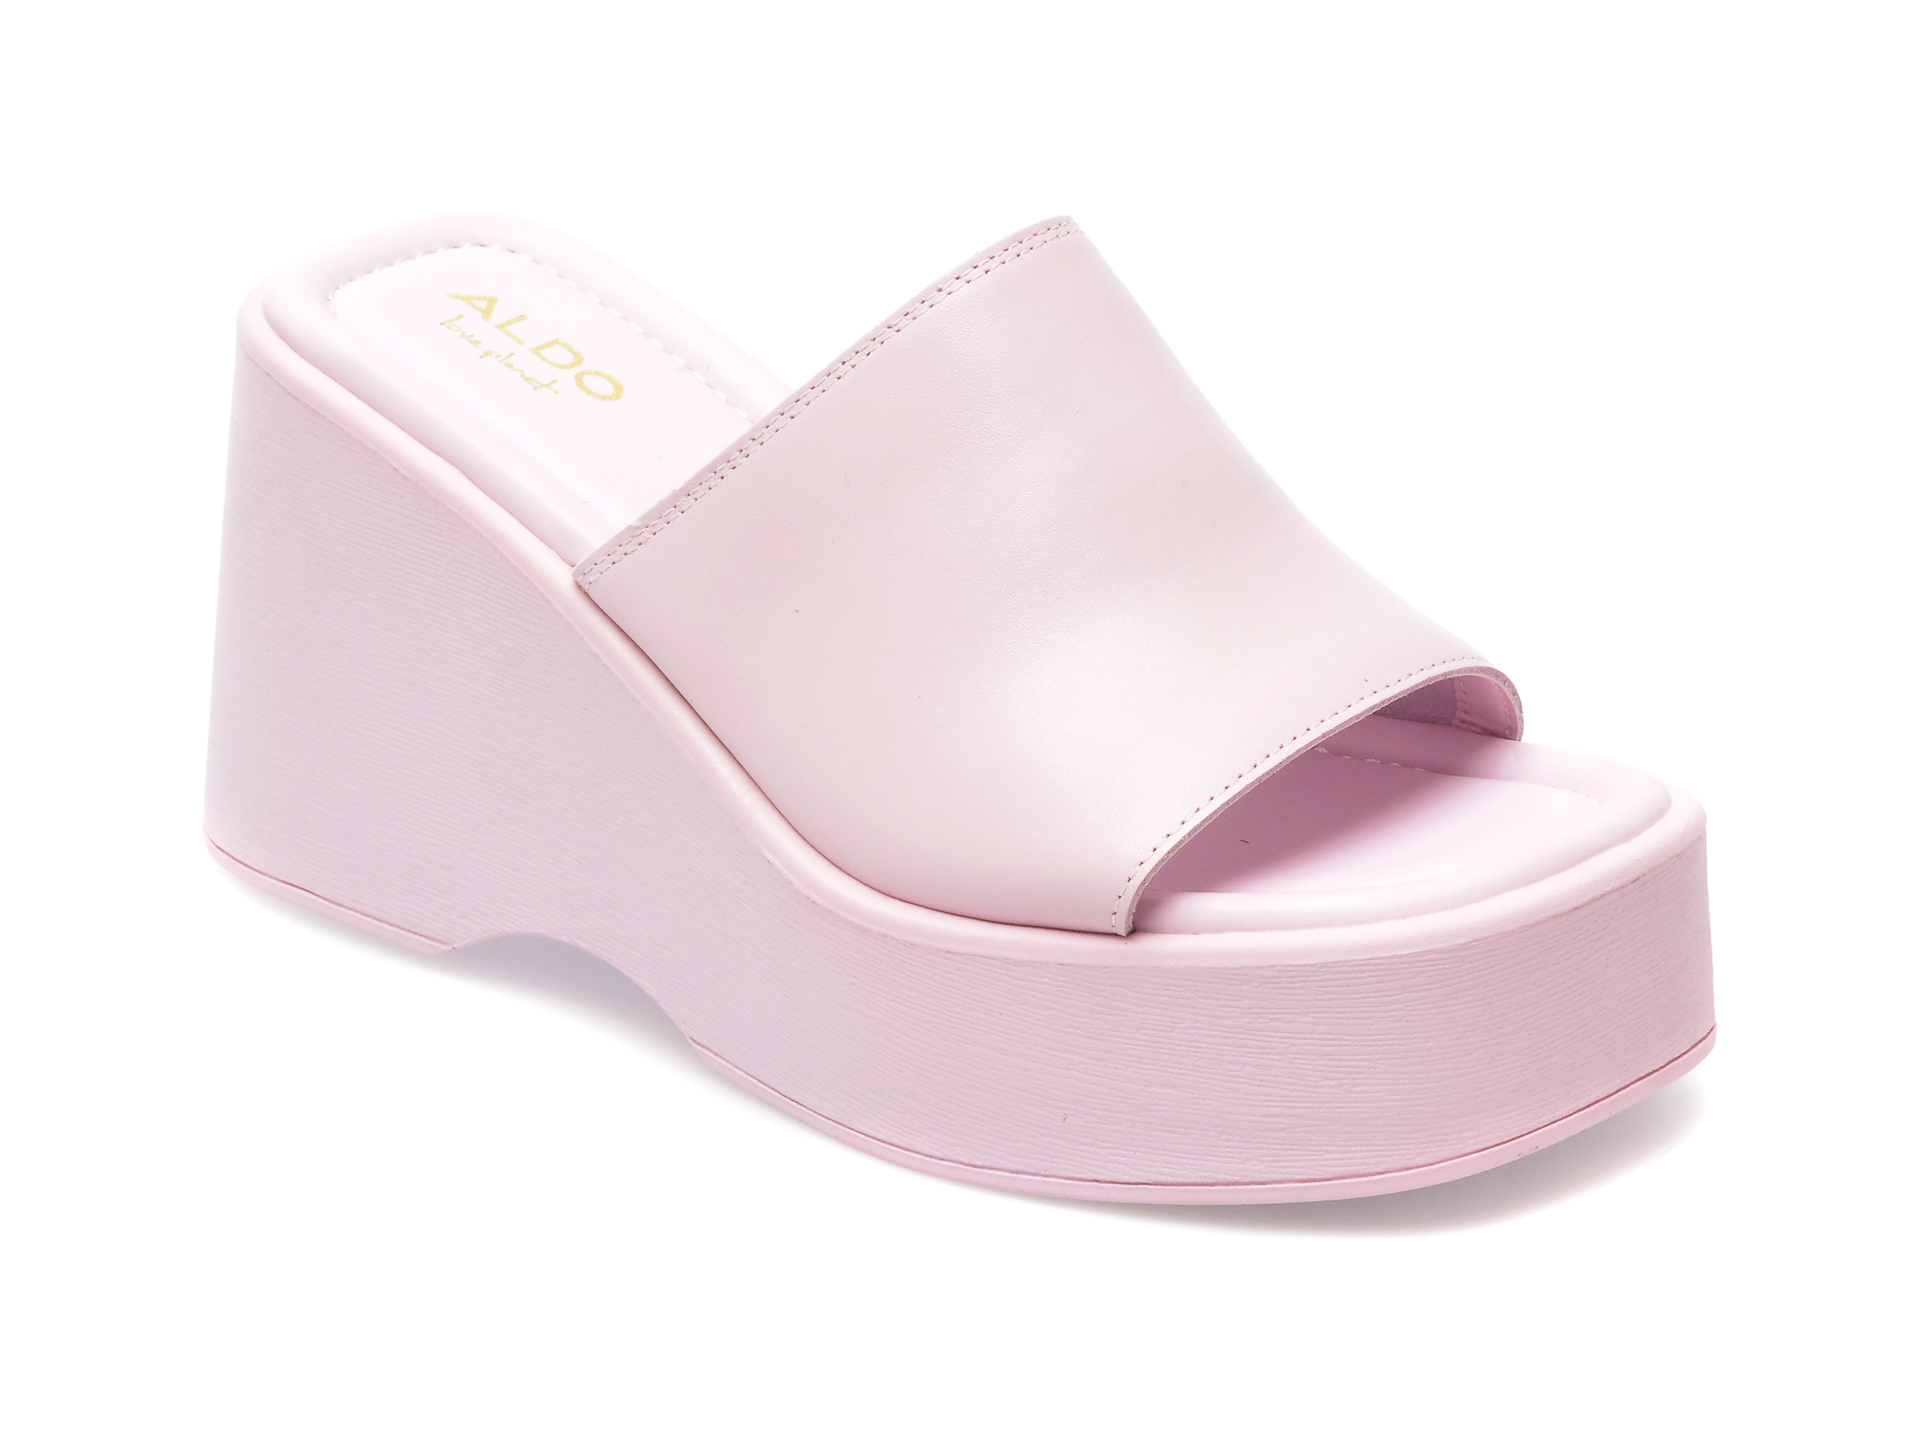 Sandale ALDO roz, BETTA650, din piele naturala Answear 2023-09-28